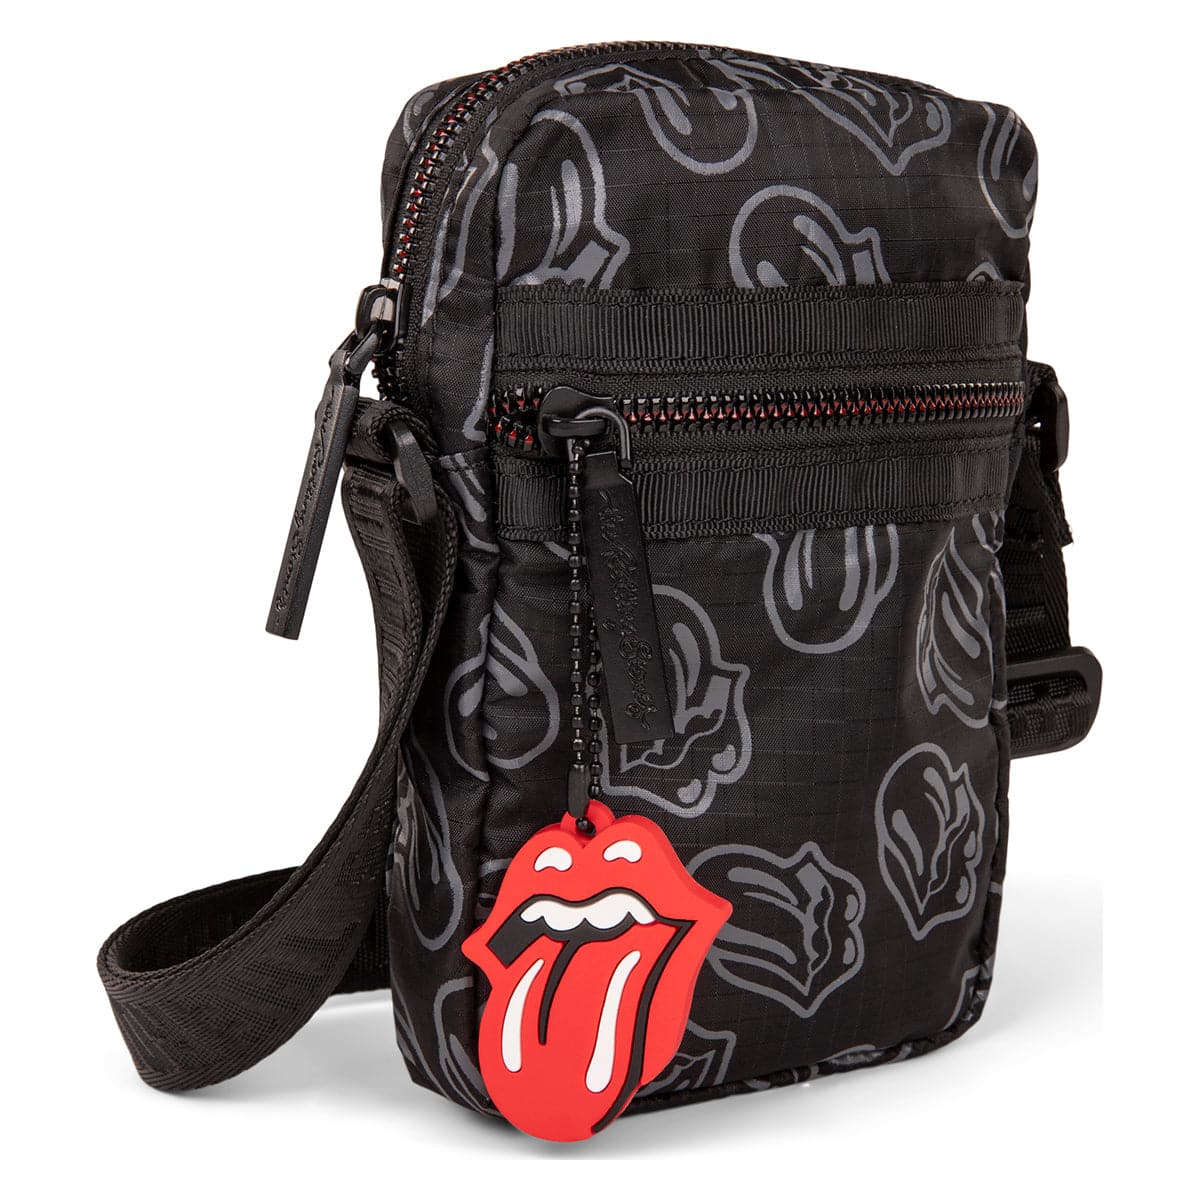 The Rolling Stones Evolution Mobile Bag